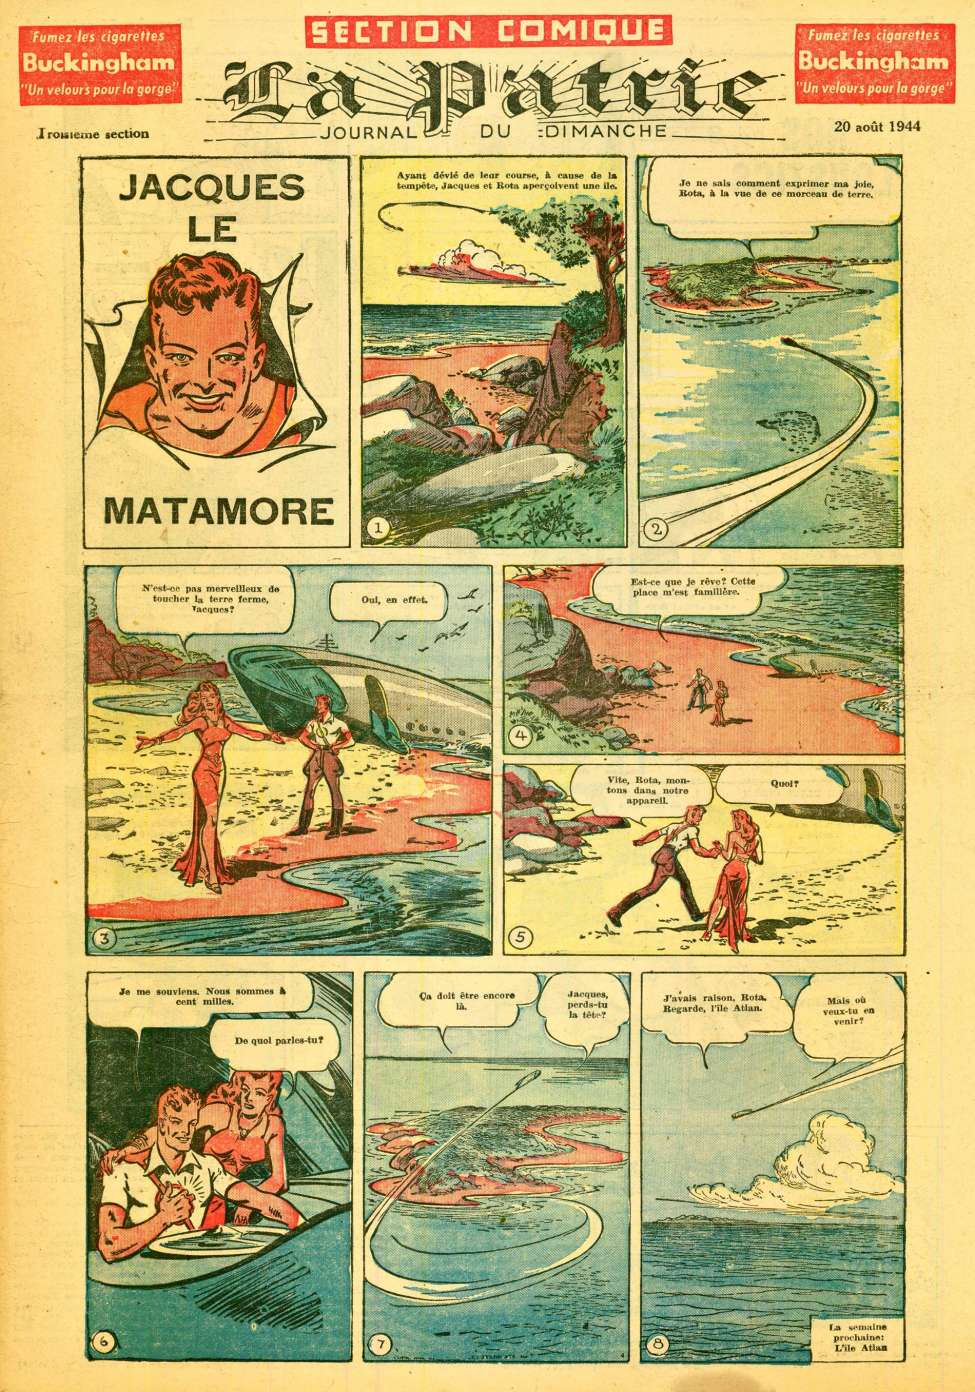 Comic Book Cover For La Patrie - Section Comique (1944-08-20)